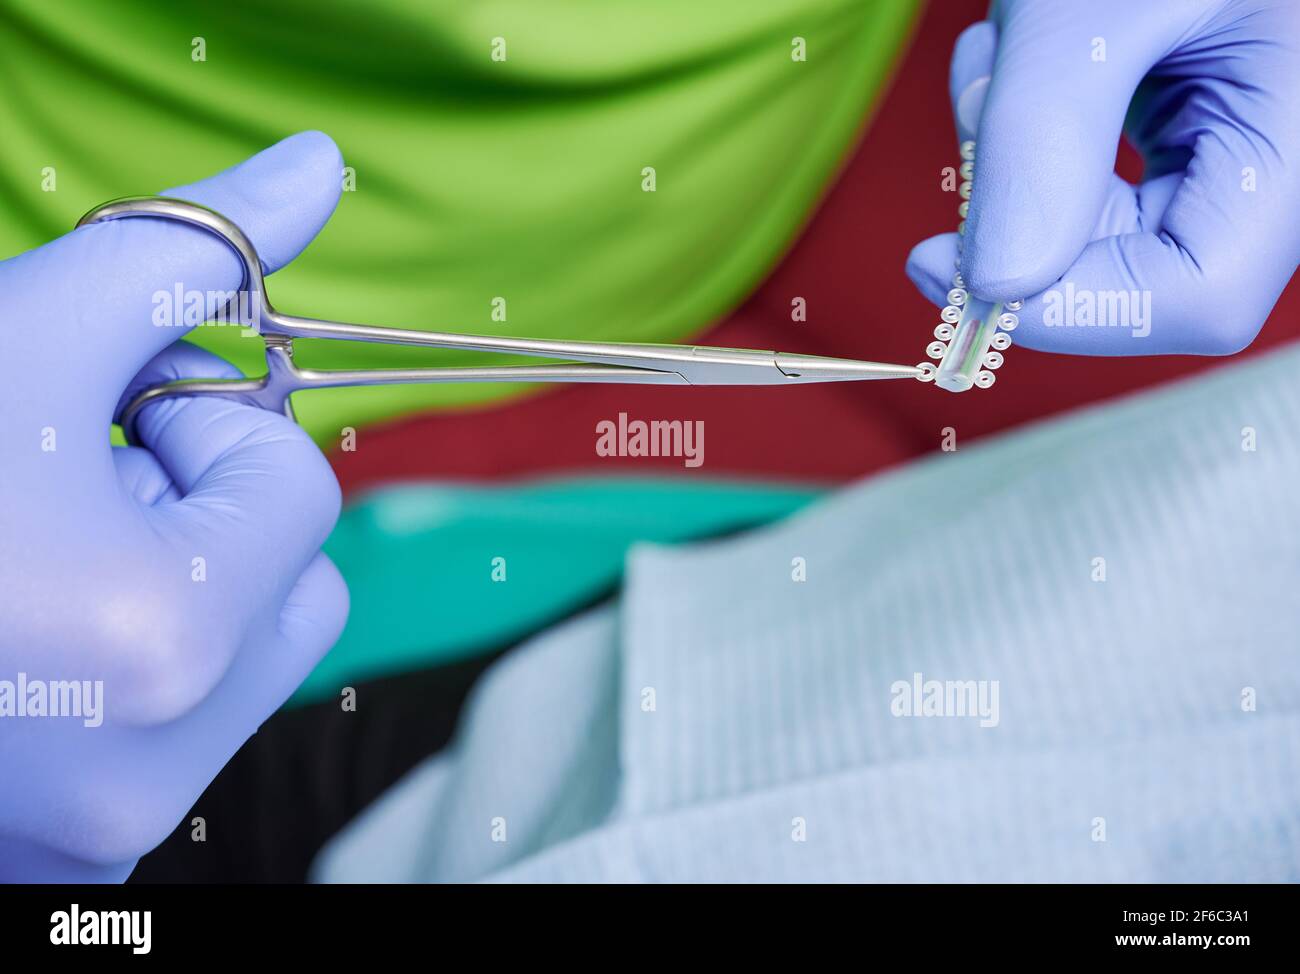 Orthodontist hands cutting elastic ligature ties with dental scissors. Stock Photo